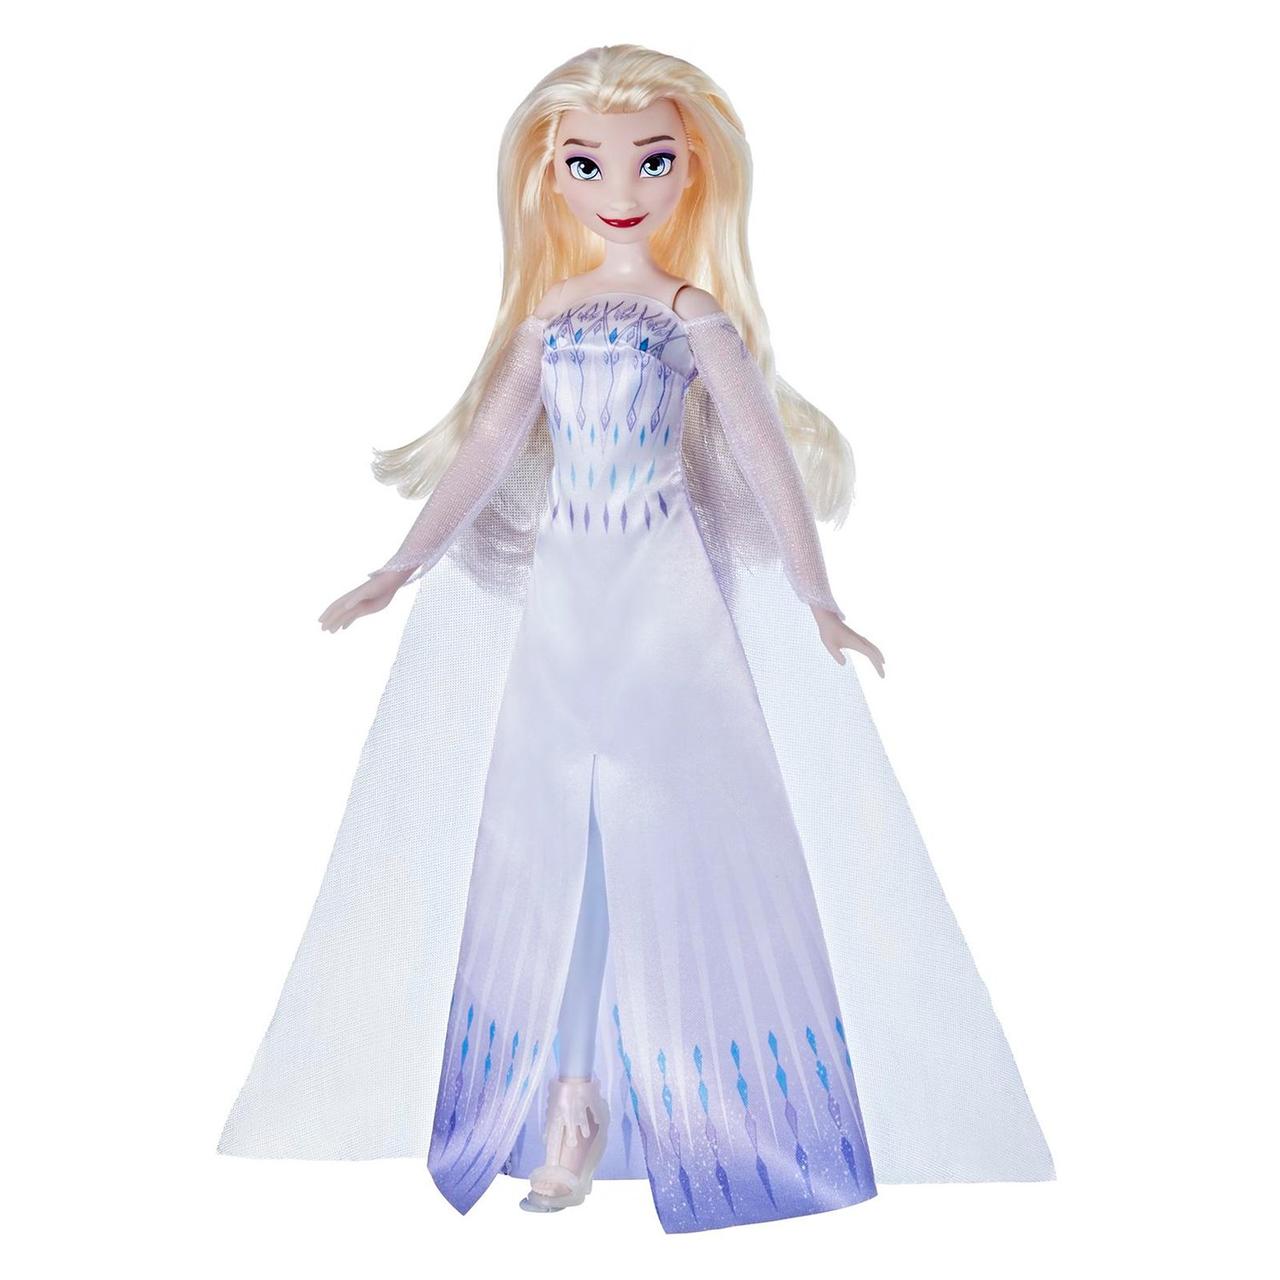 Кукла Disney Frozen Холодное Сердце 2 Королева Эльза F1411